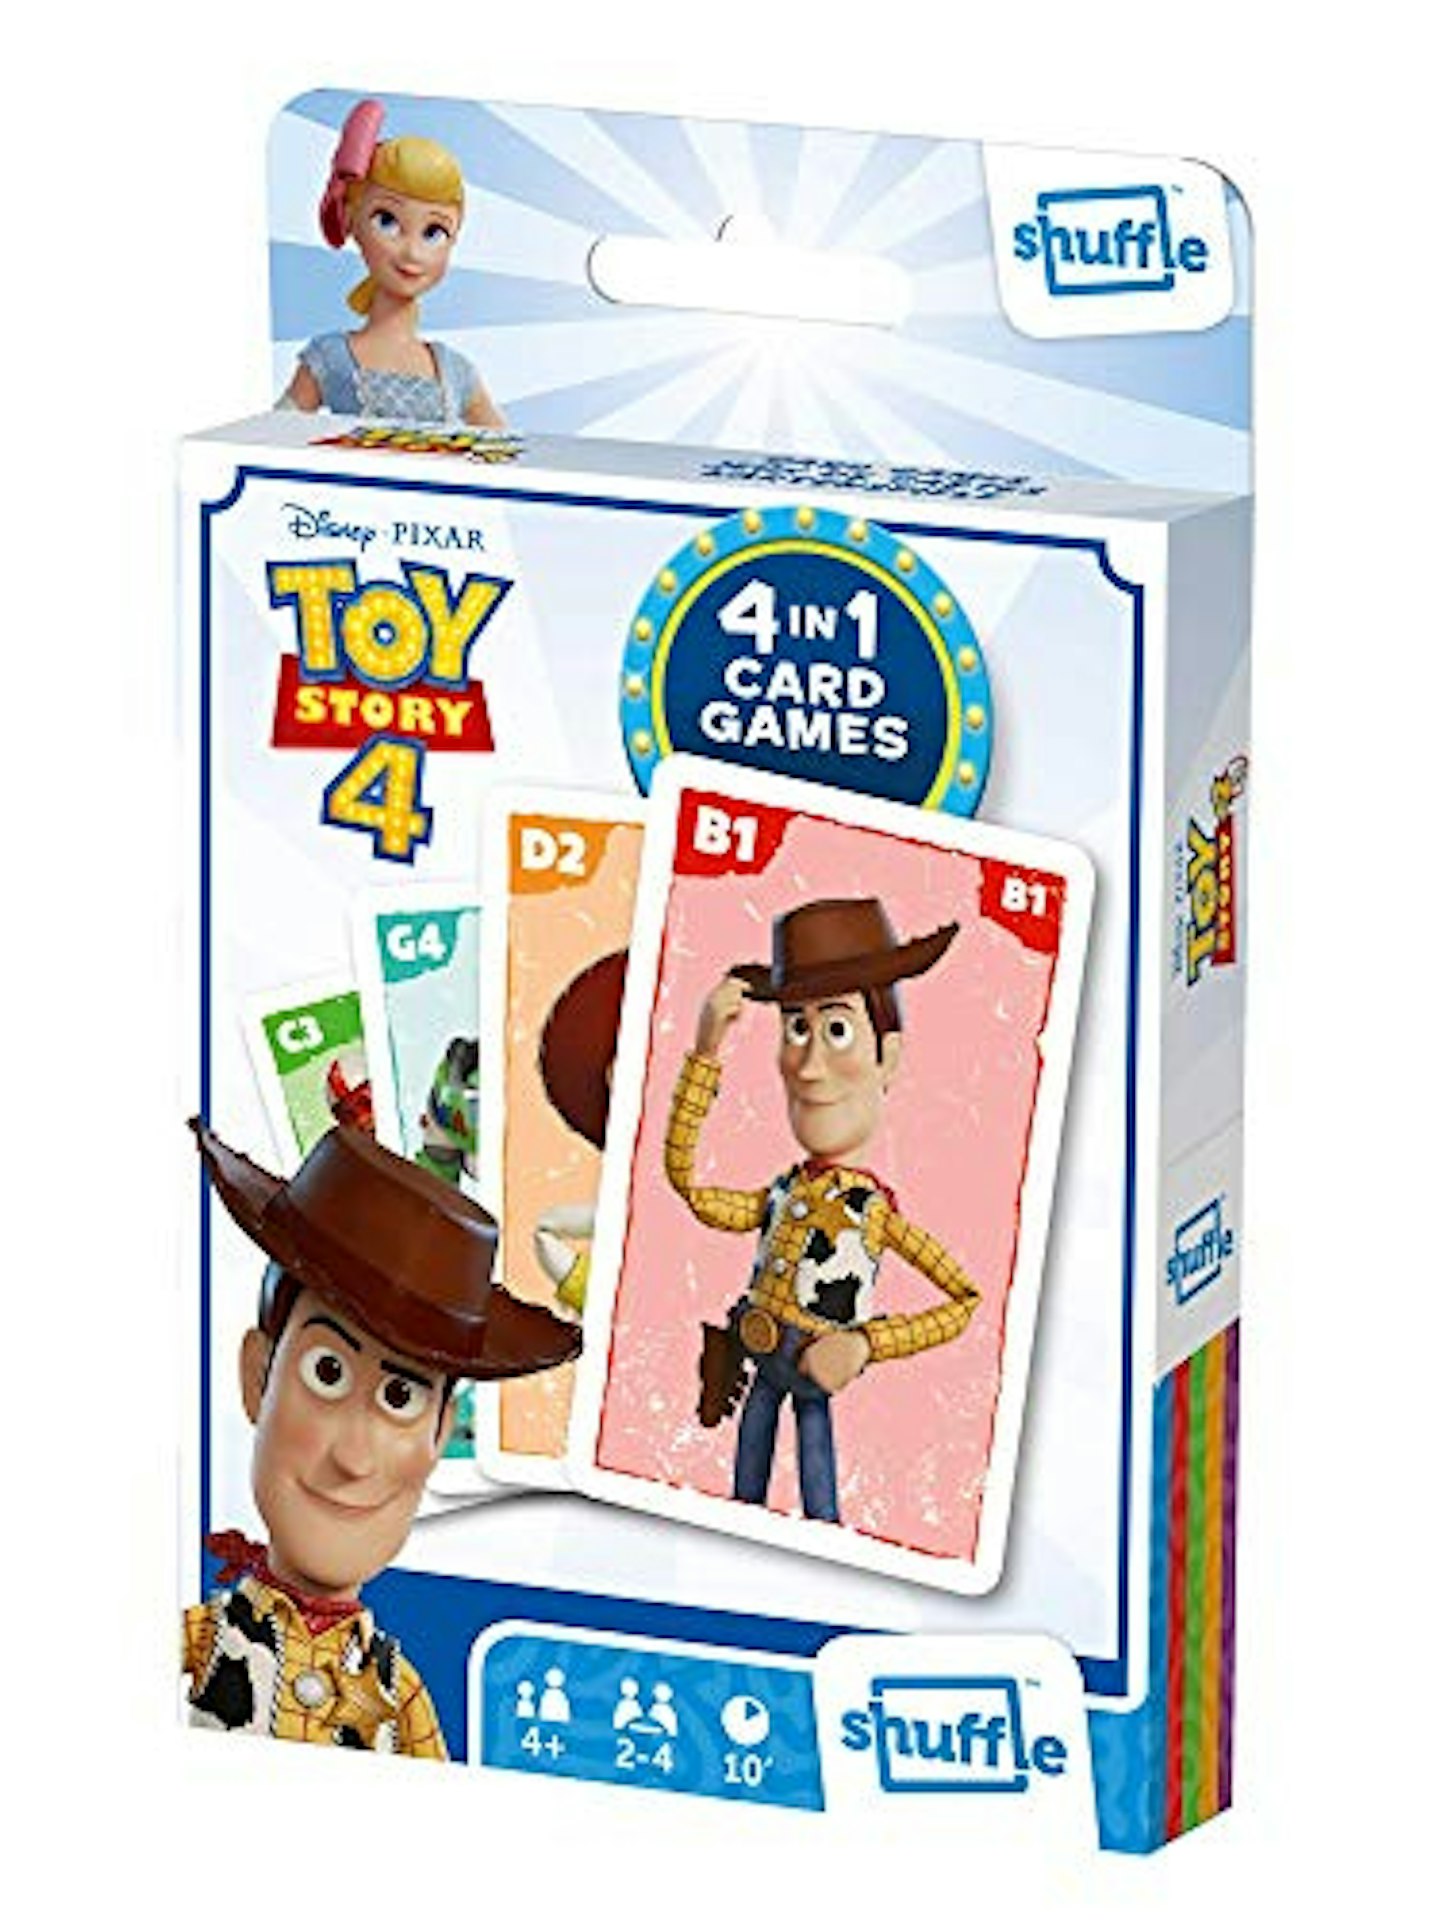 Shuffle Card Game Fun 4 in 1 Toy Story 4